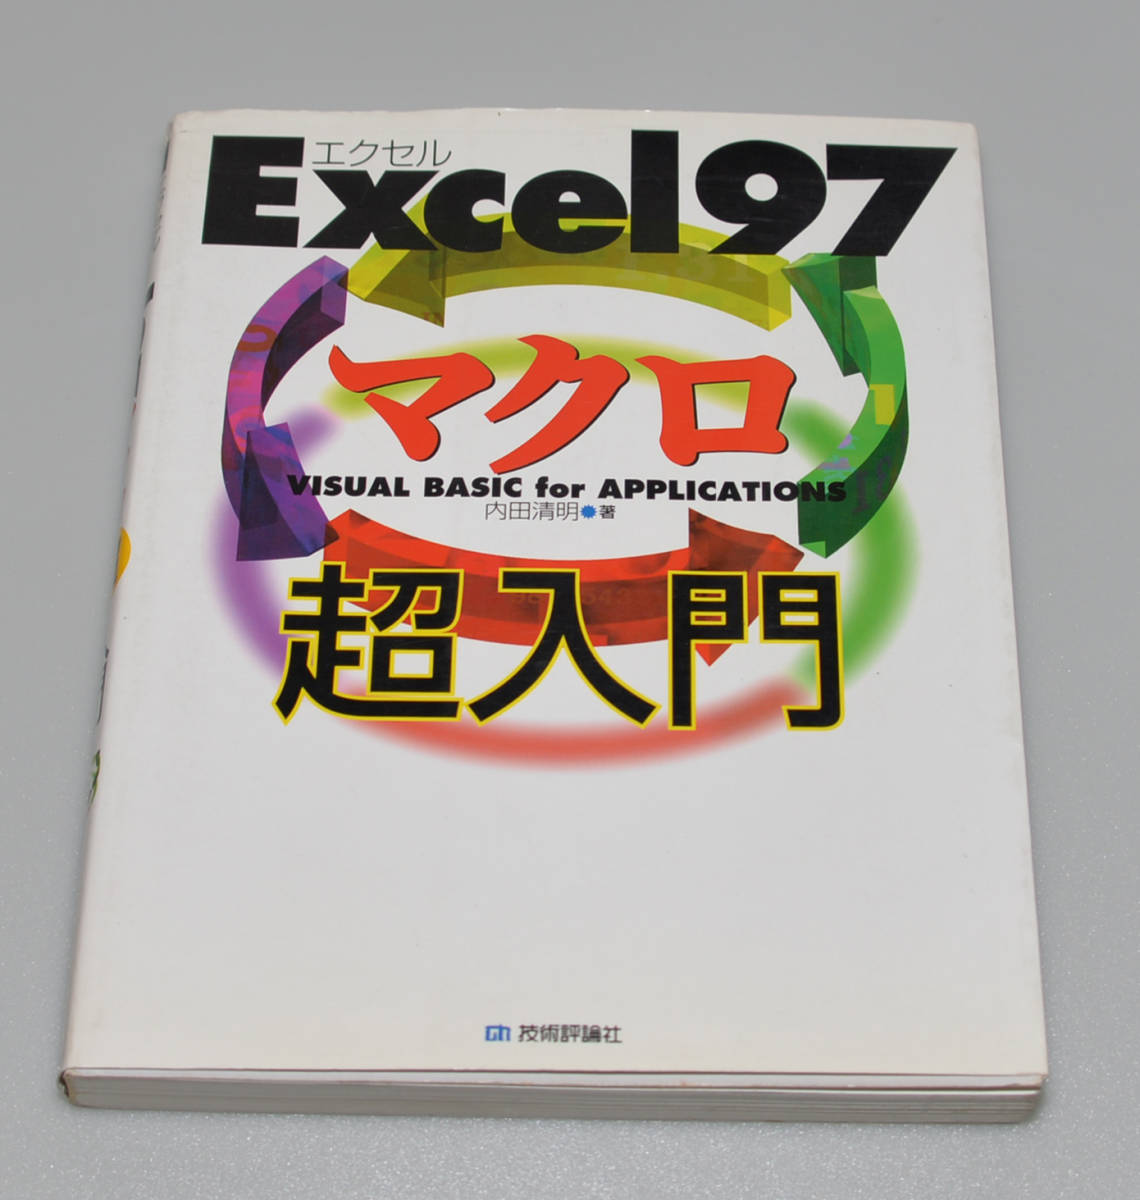 Excel 97 macro супер введение Visual Basic for applications внутри рисовое поле Kiyoshi Akira ( работа ) старая книга 